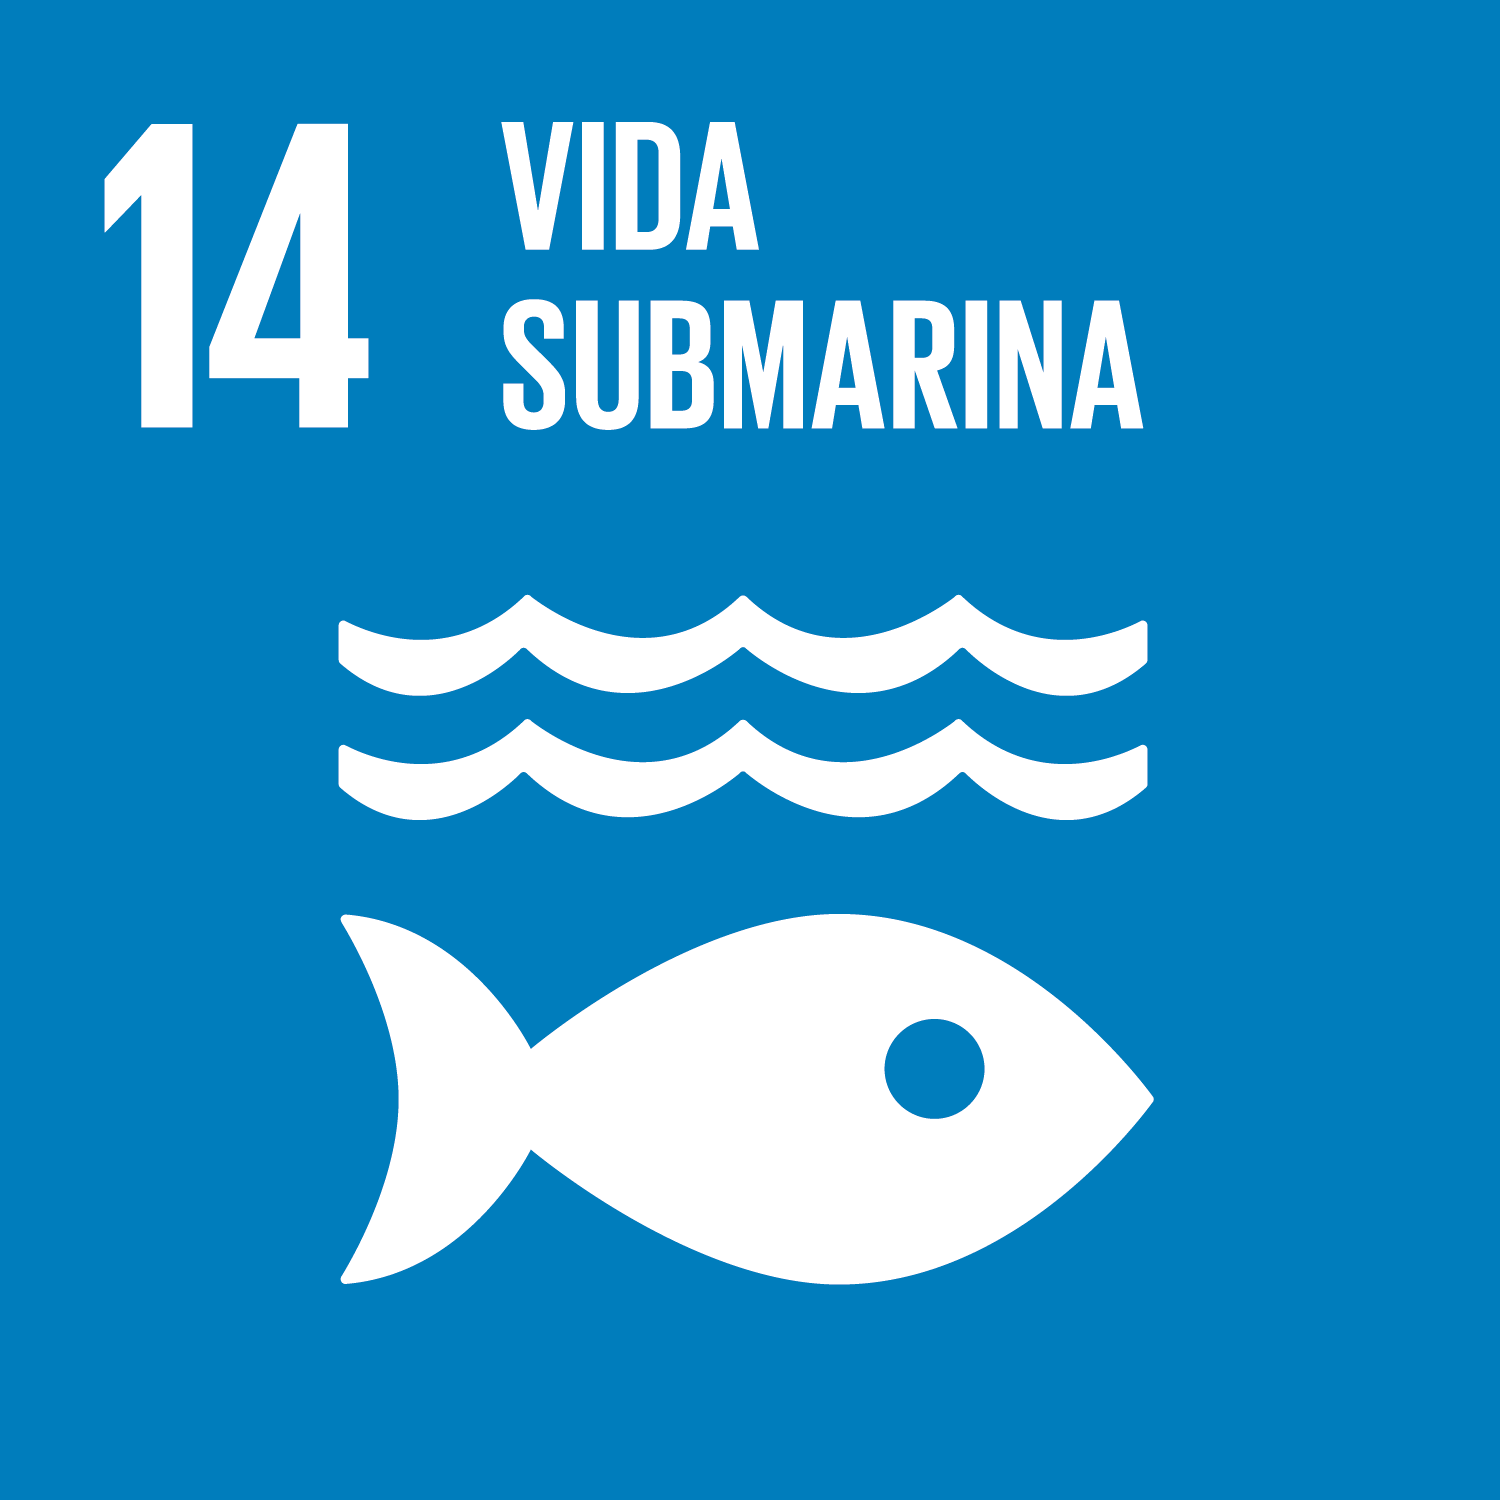 ODS 14.Vida submarina